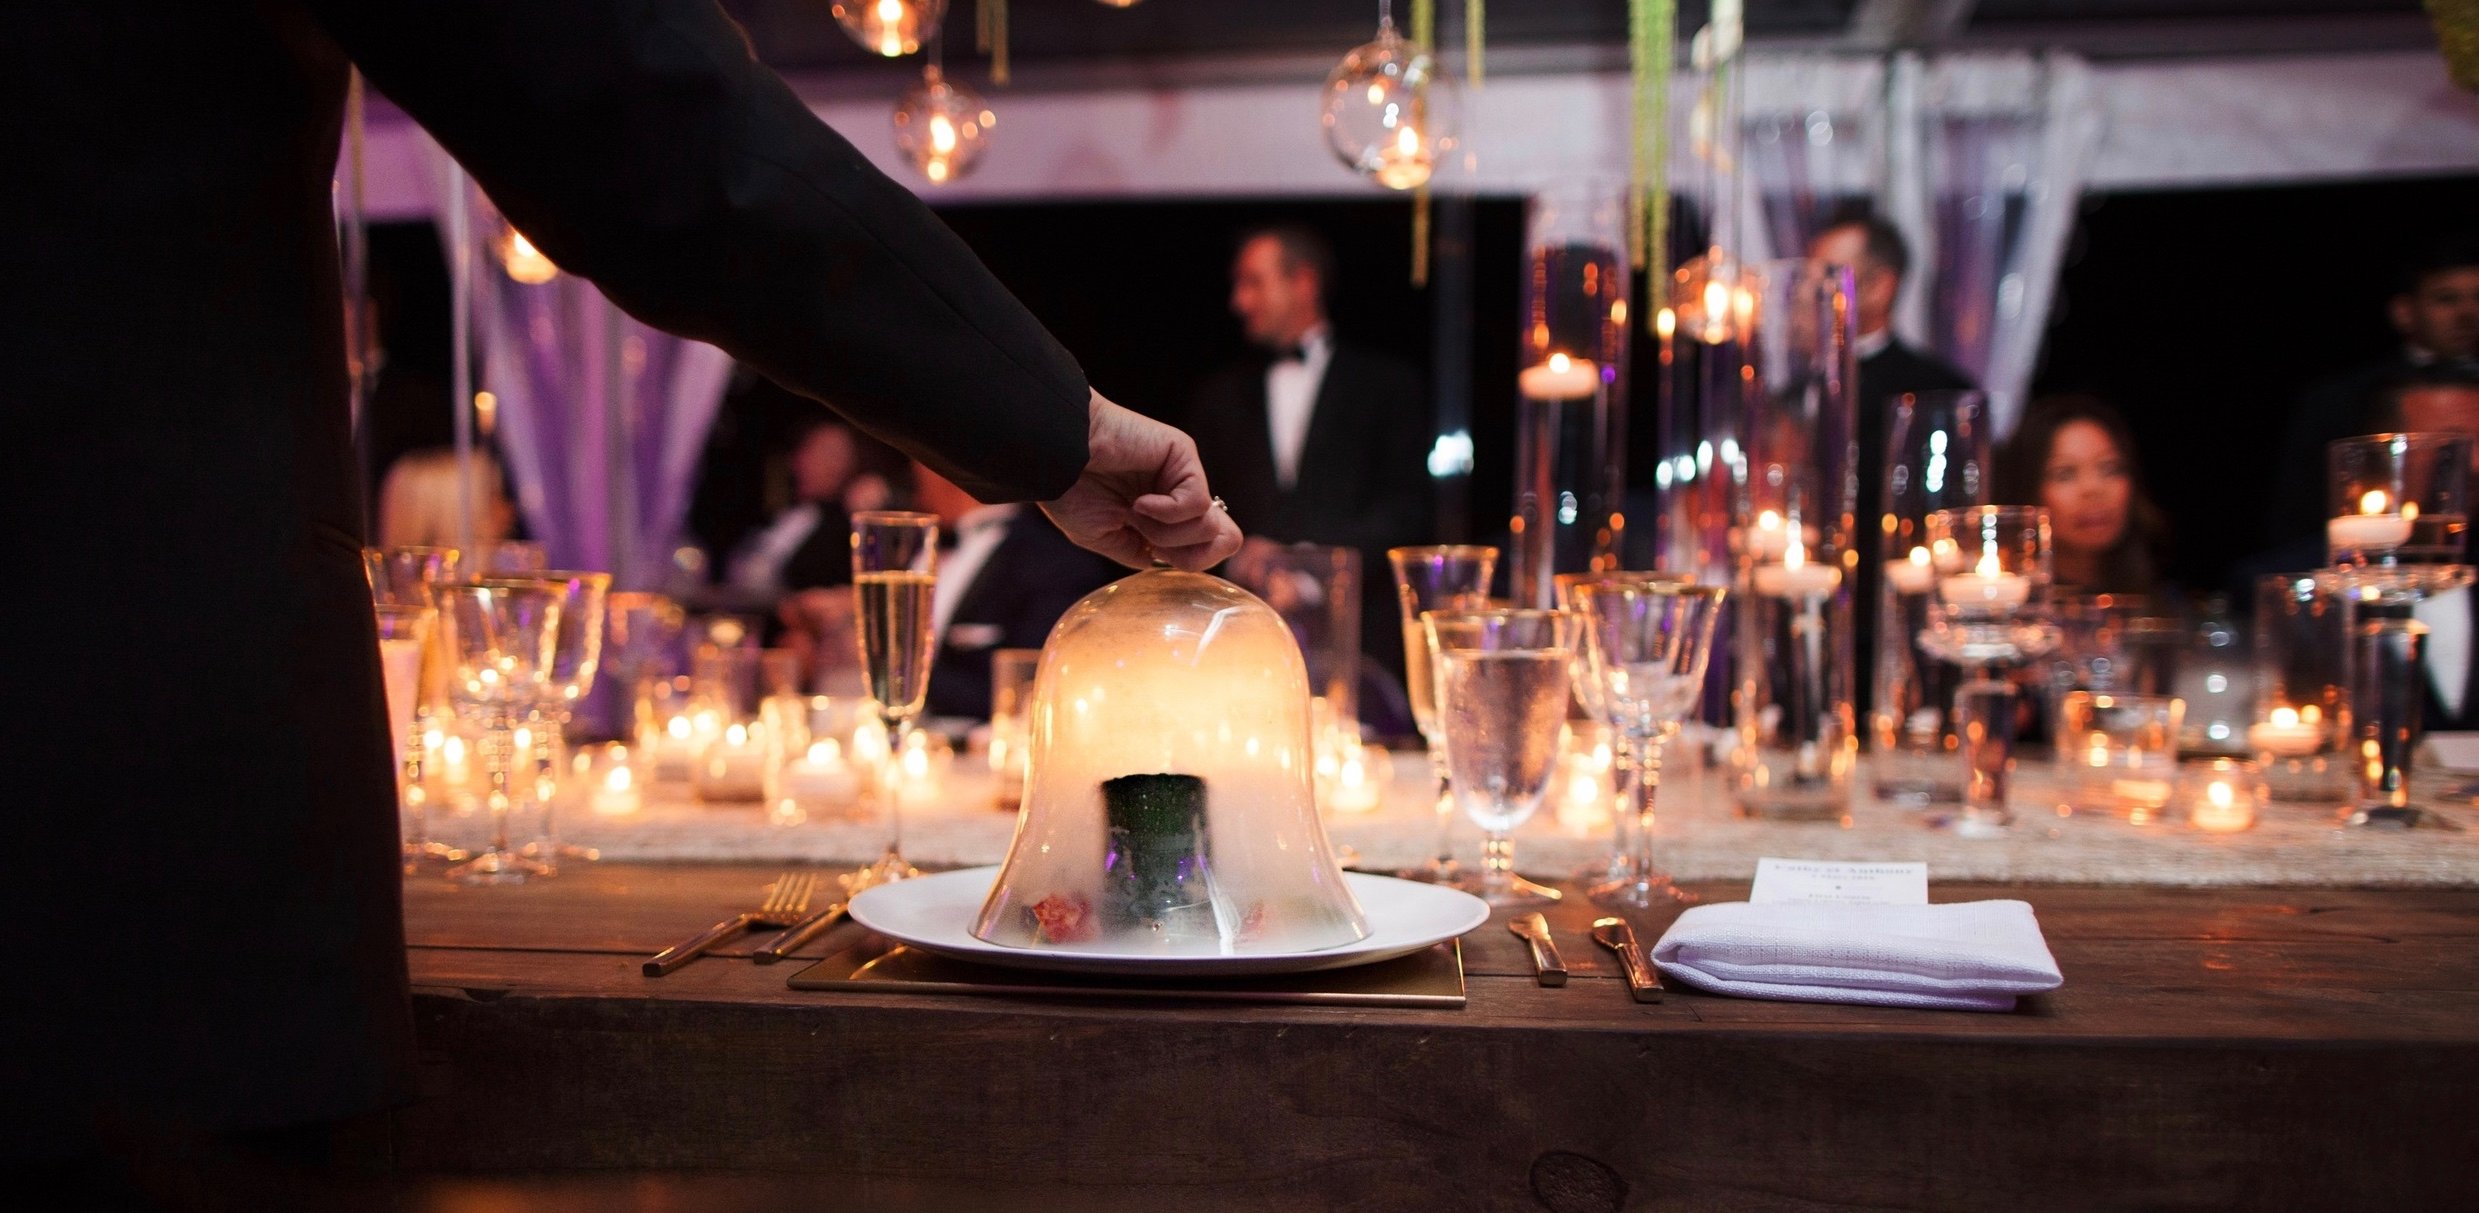 Butler+served+salad+appetizer+-+miami+luxury+wedding+catering.jpg